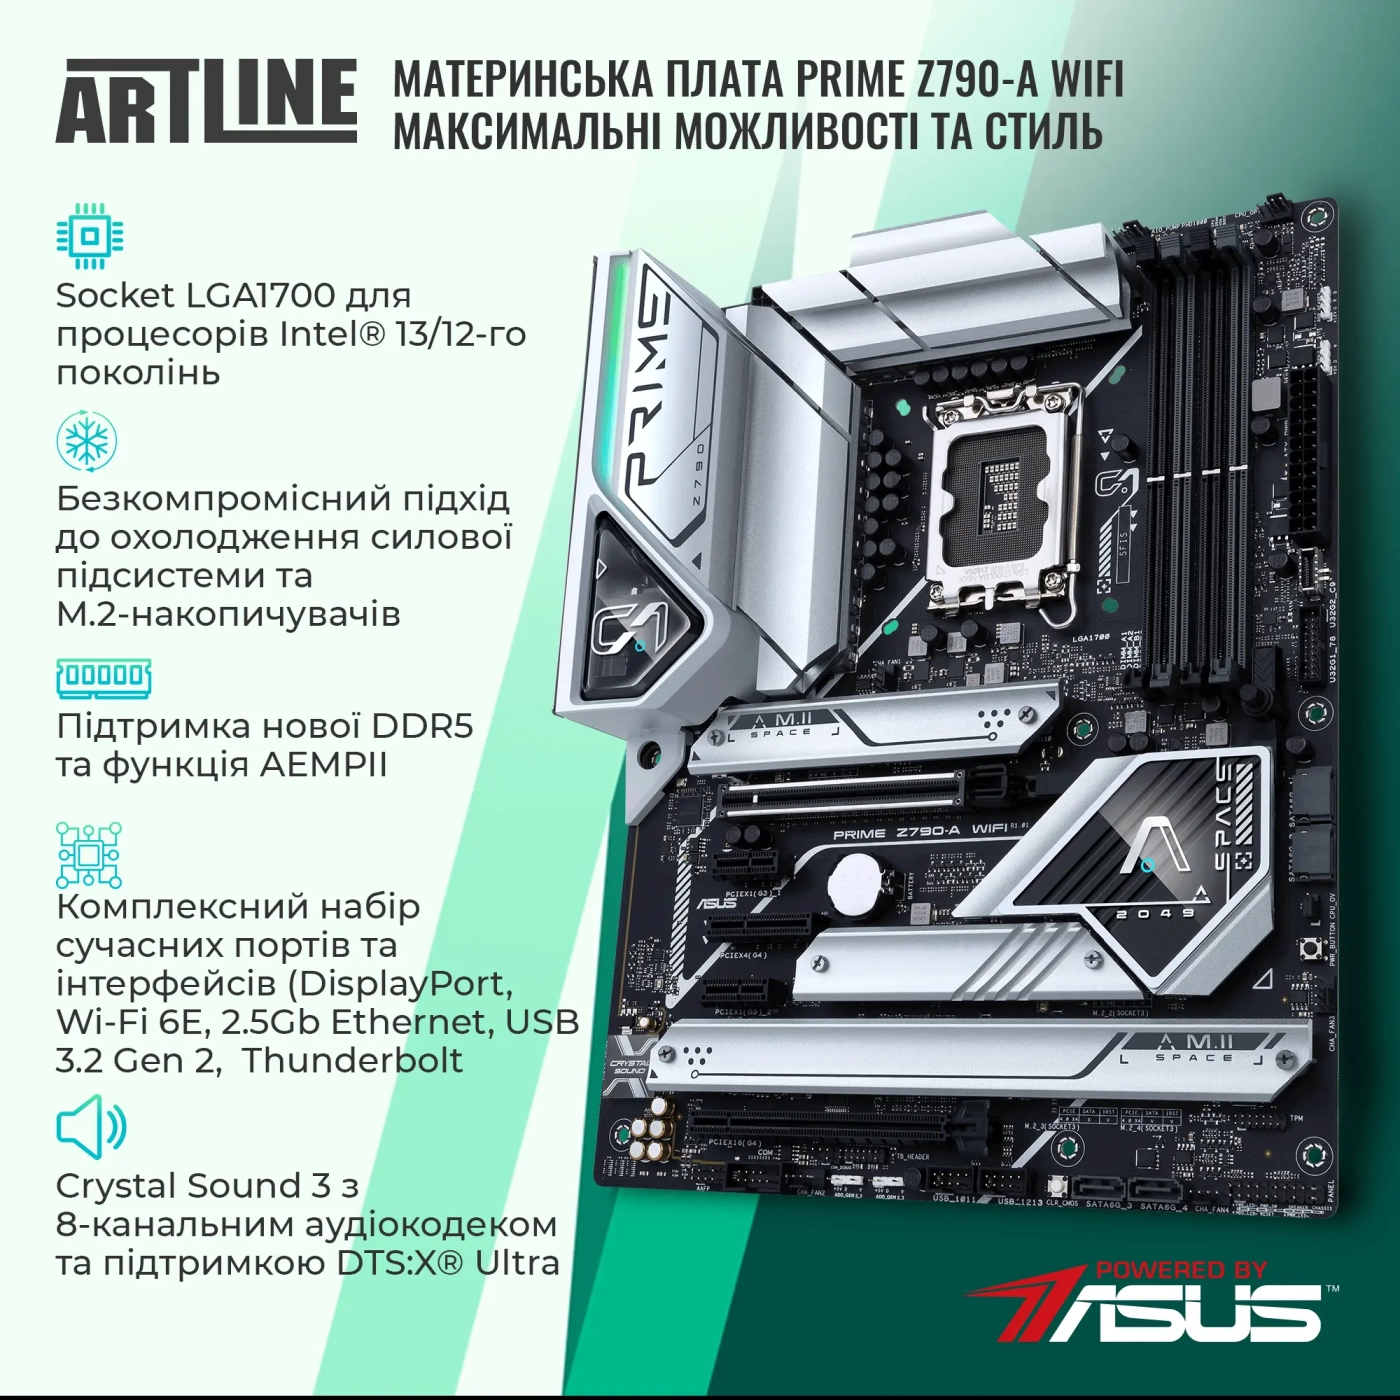 Купити Комп'ютер ARTLINE Gaming GT502 (GT502v47w) - фото 3